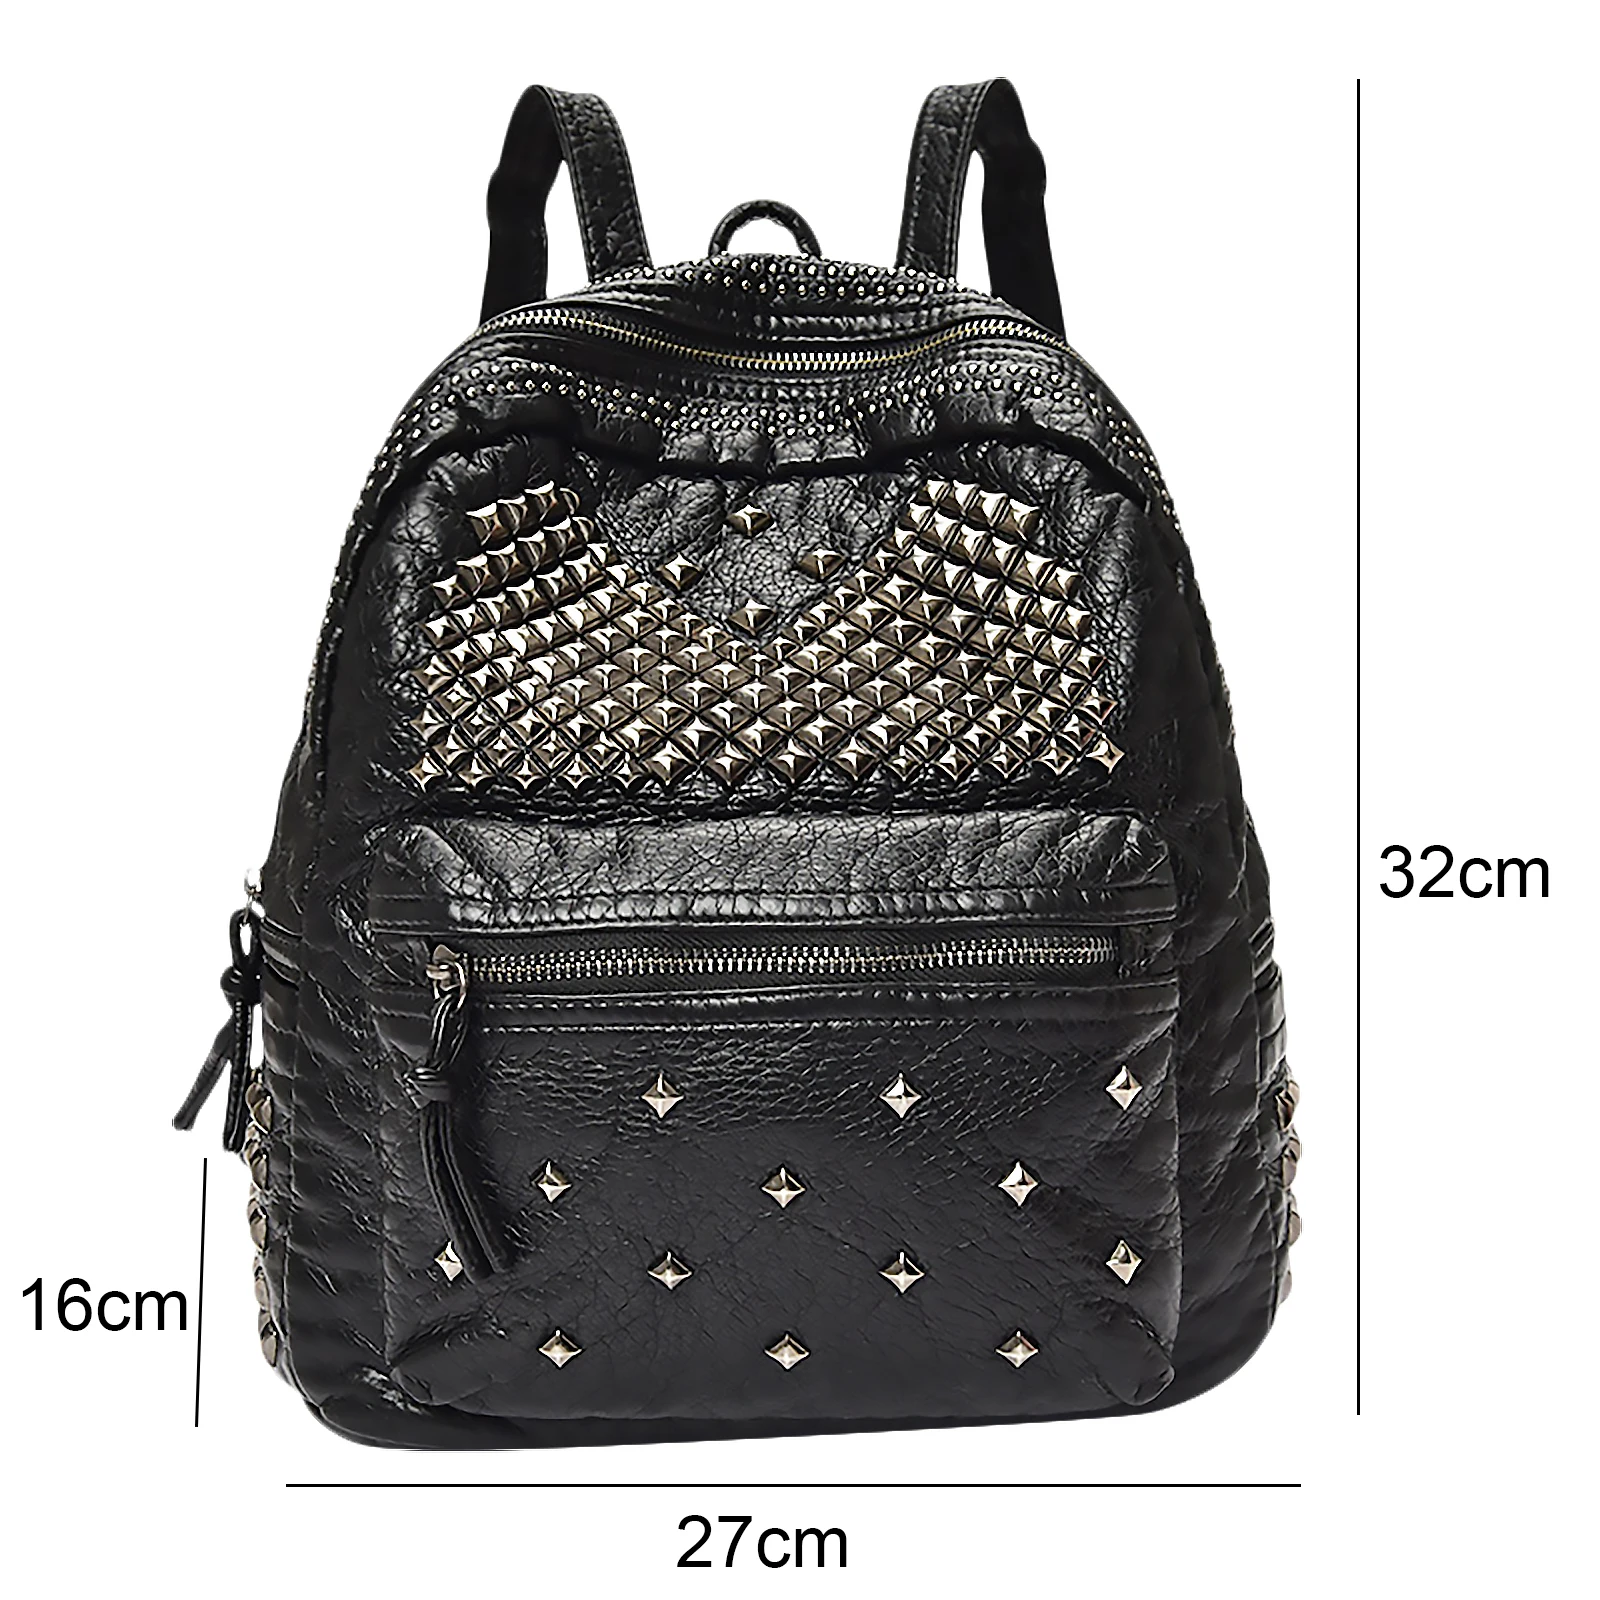 Casual Girls Shoulder Backpack Creative Rivet Studded Design Large Capacity Handbag Travel Shopping Student School Bags Rucksack 